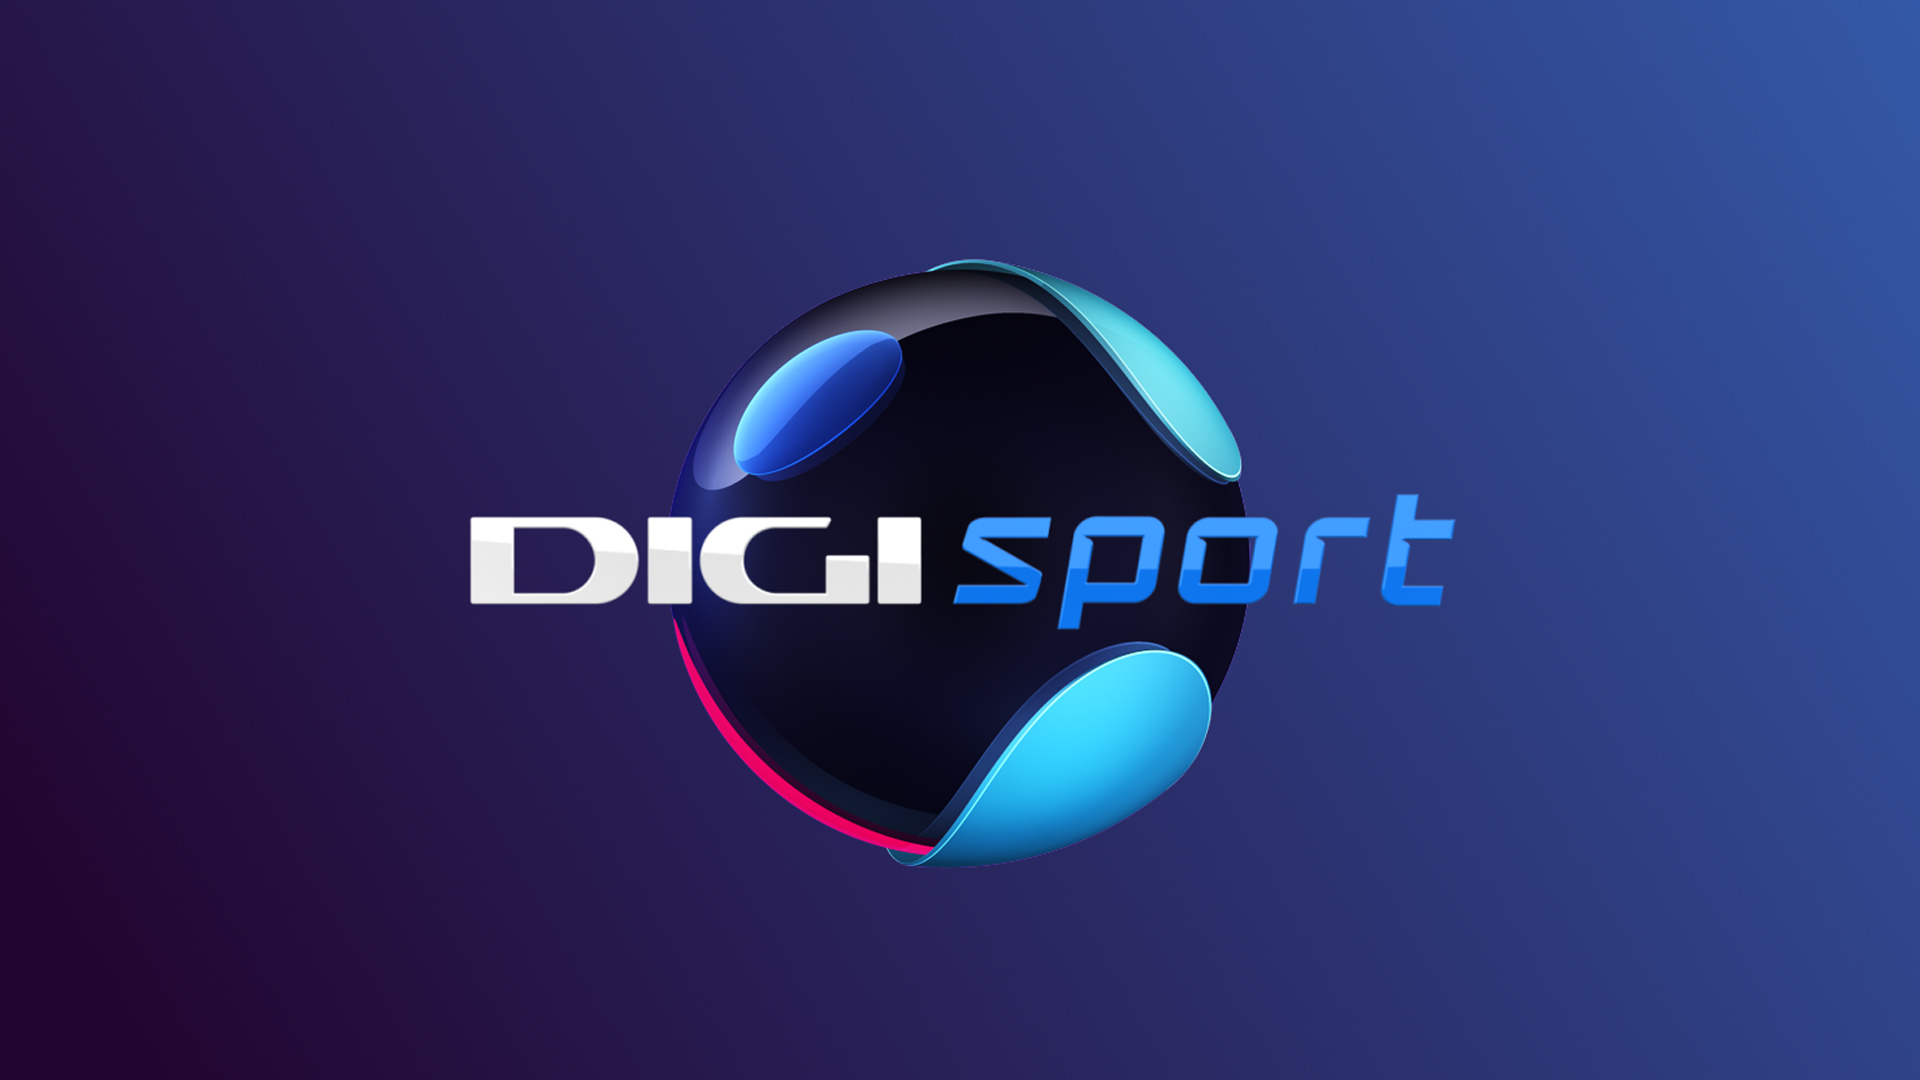 Kemistry rebrands Digi Sport - Kemistry